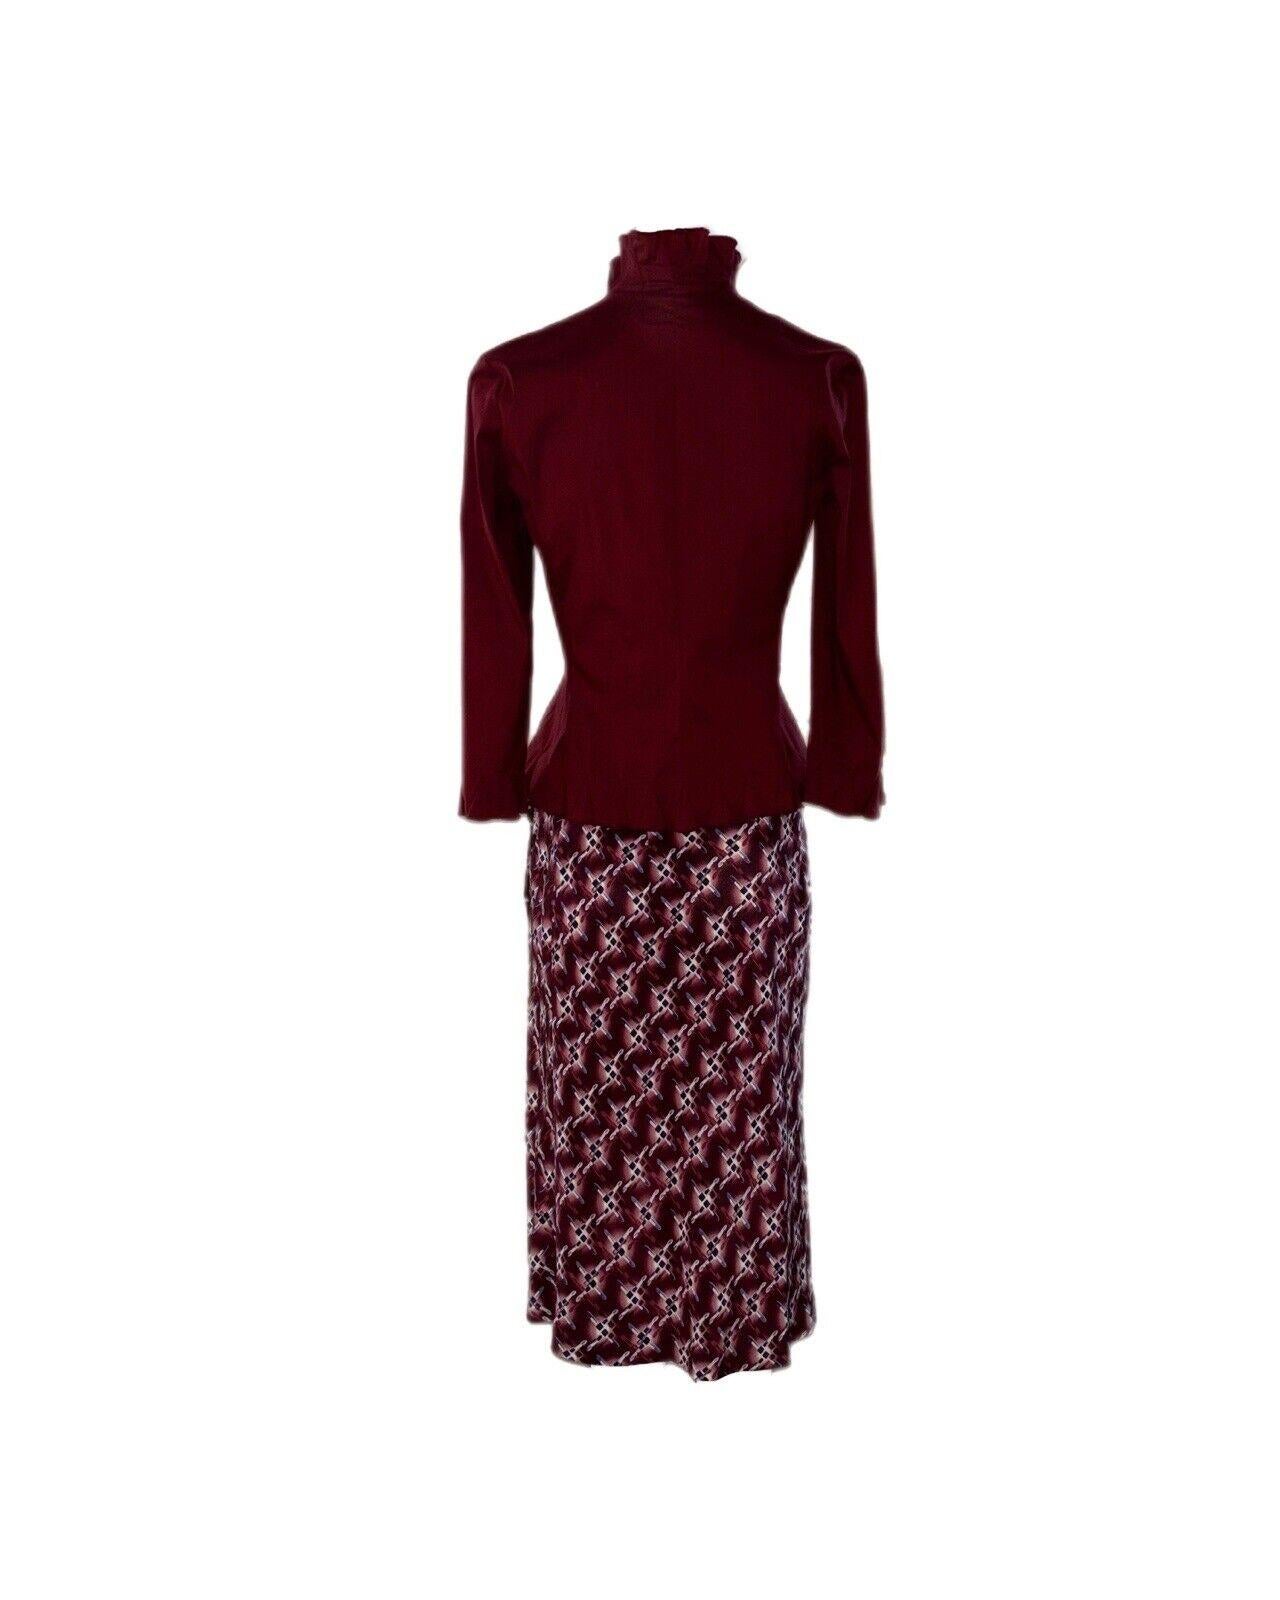 PRADA 2000 Vintage Lipstick Print Skirt Suit In Excellent Condition For Sale In Leonardo, NJ